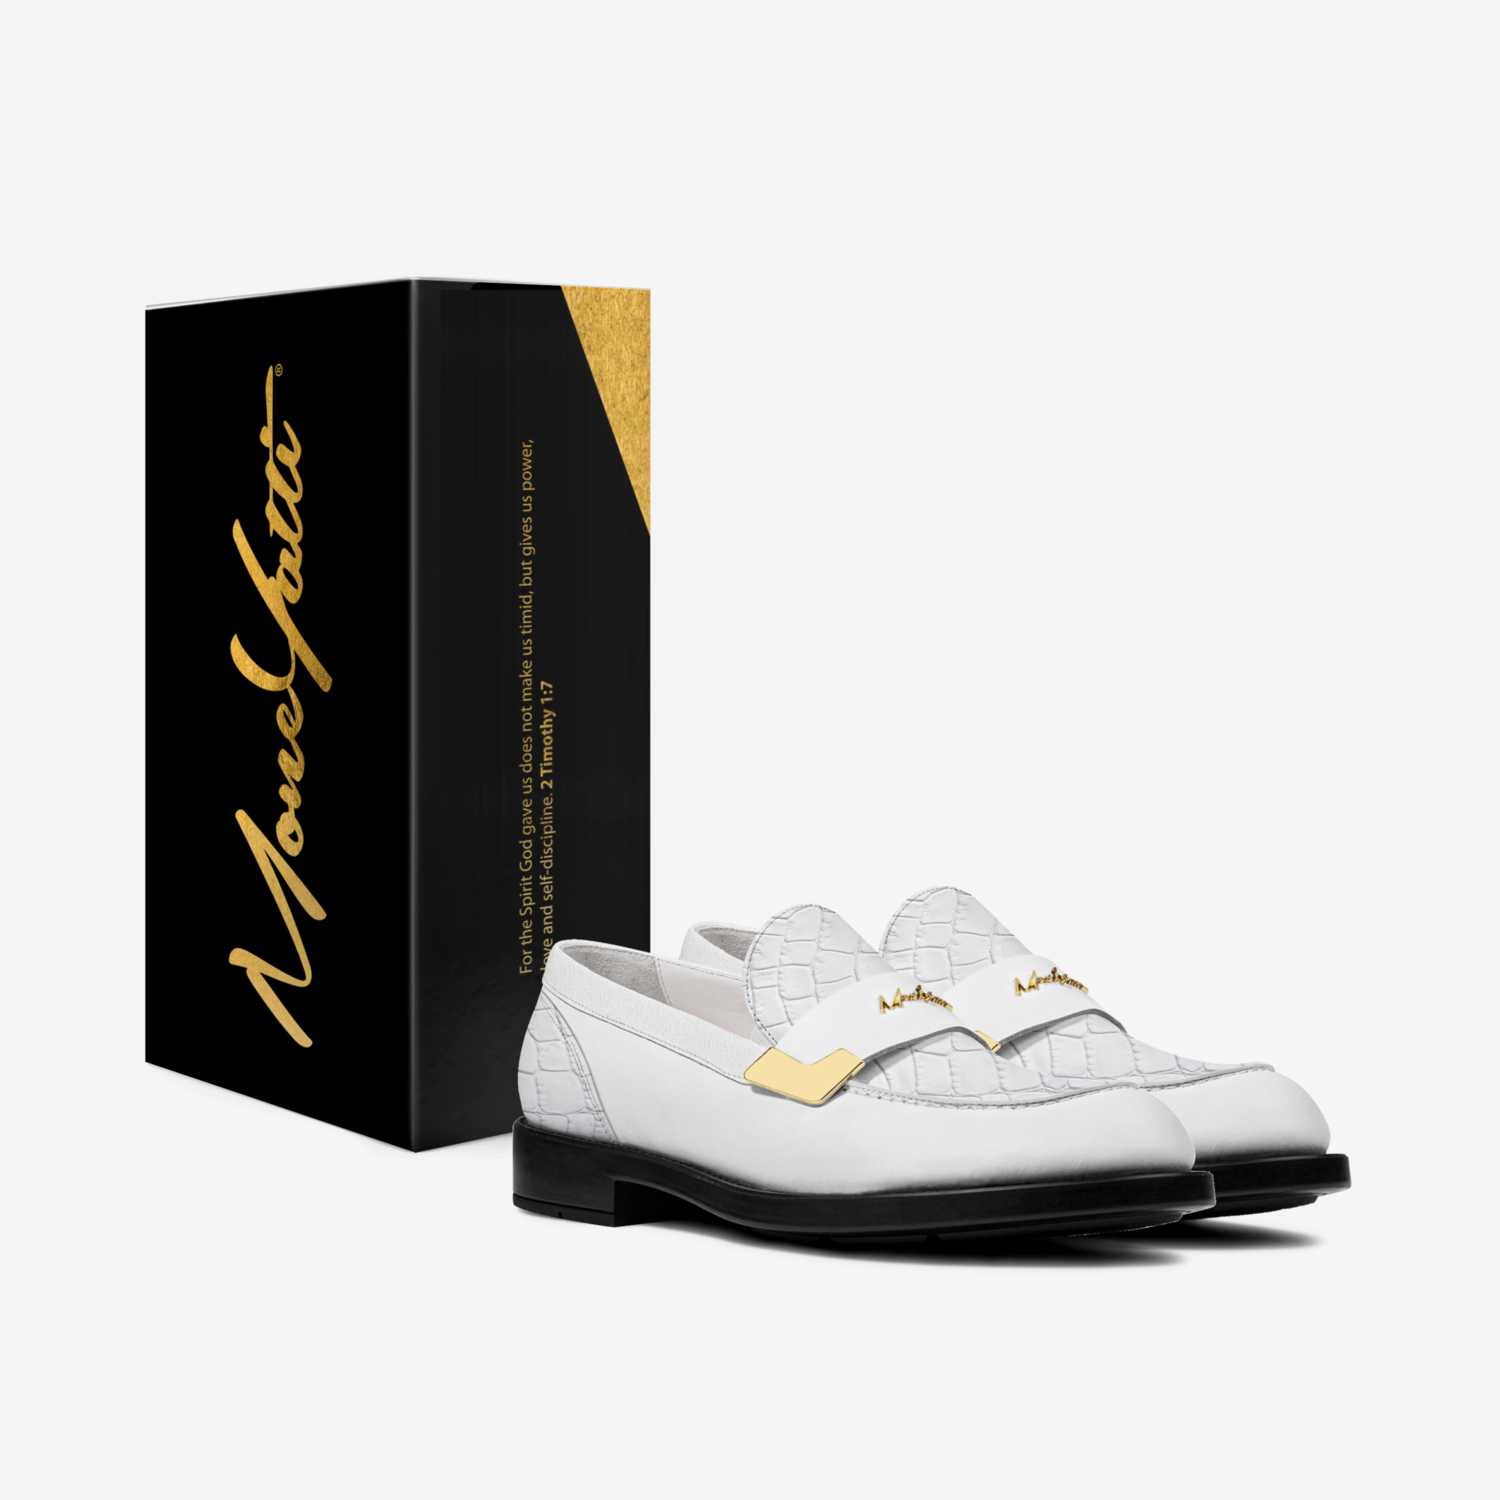 ElegantDrip 015 custom made in Italy shoes by Moneyatti Brand | Box view